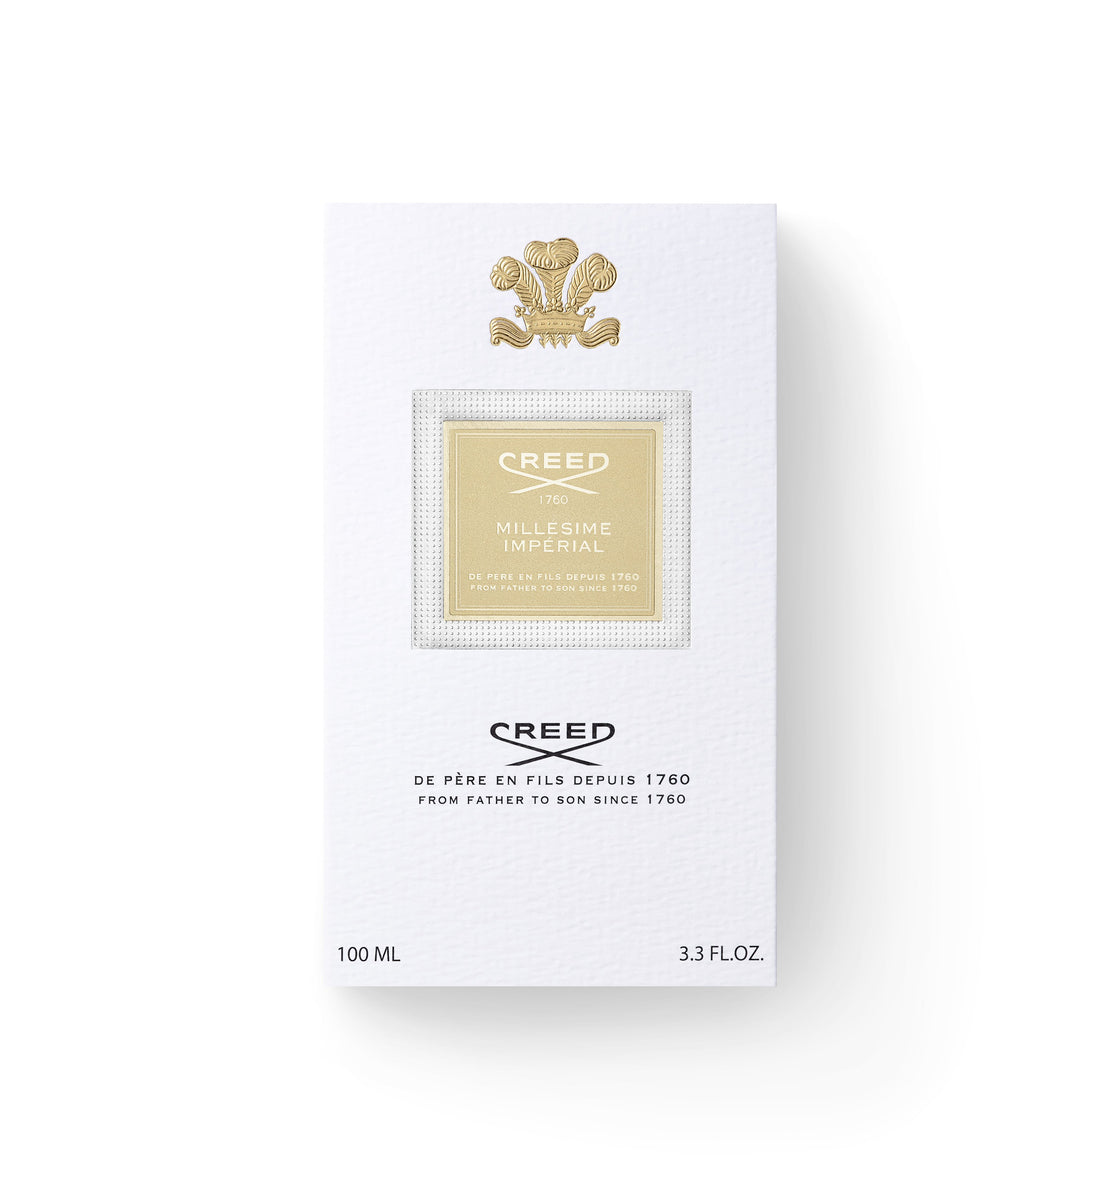 Creed Millesime Imperial 75 ml - Koch Parfymeri